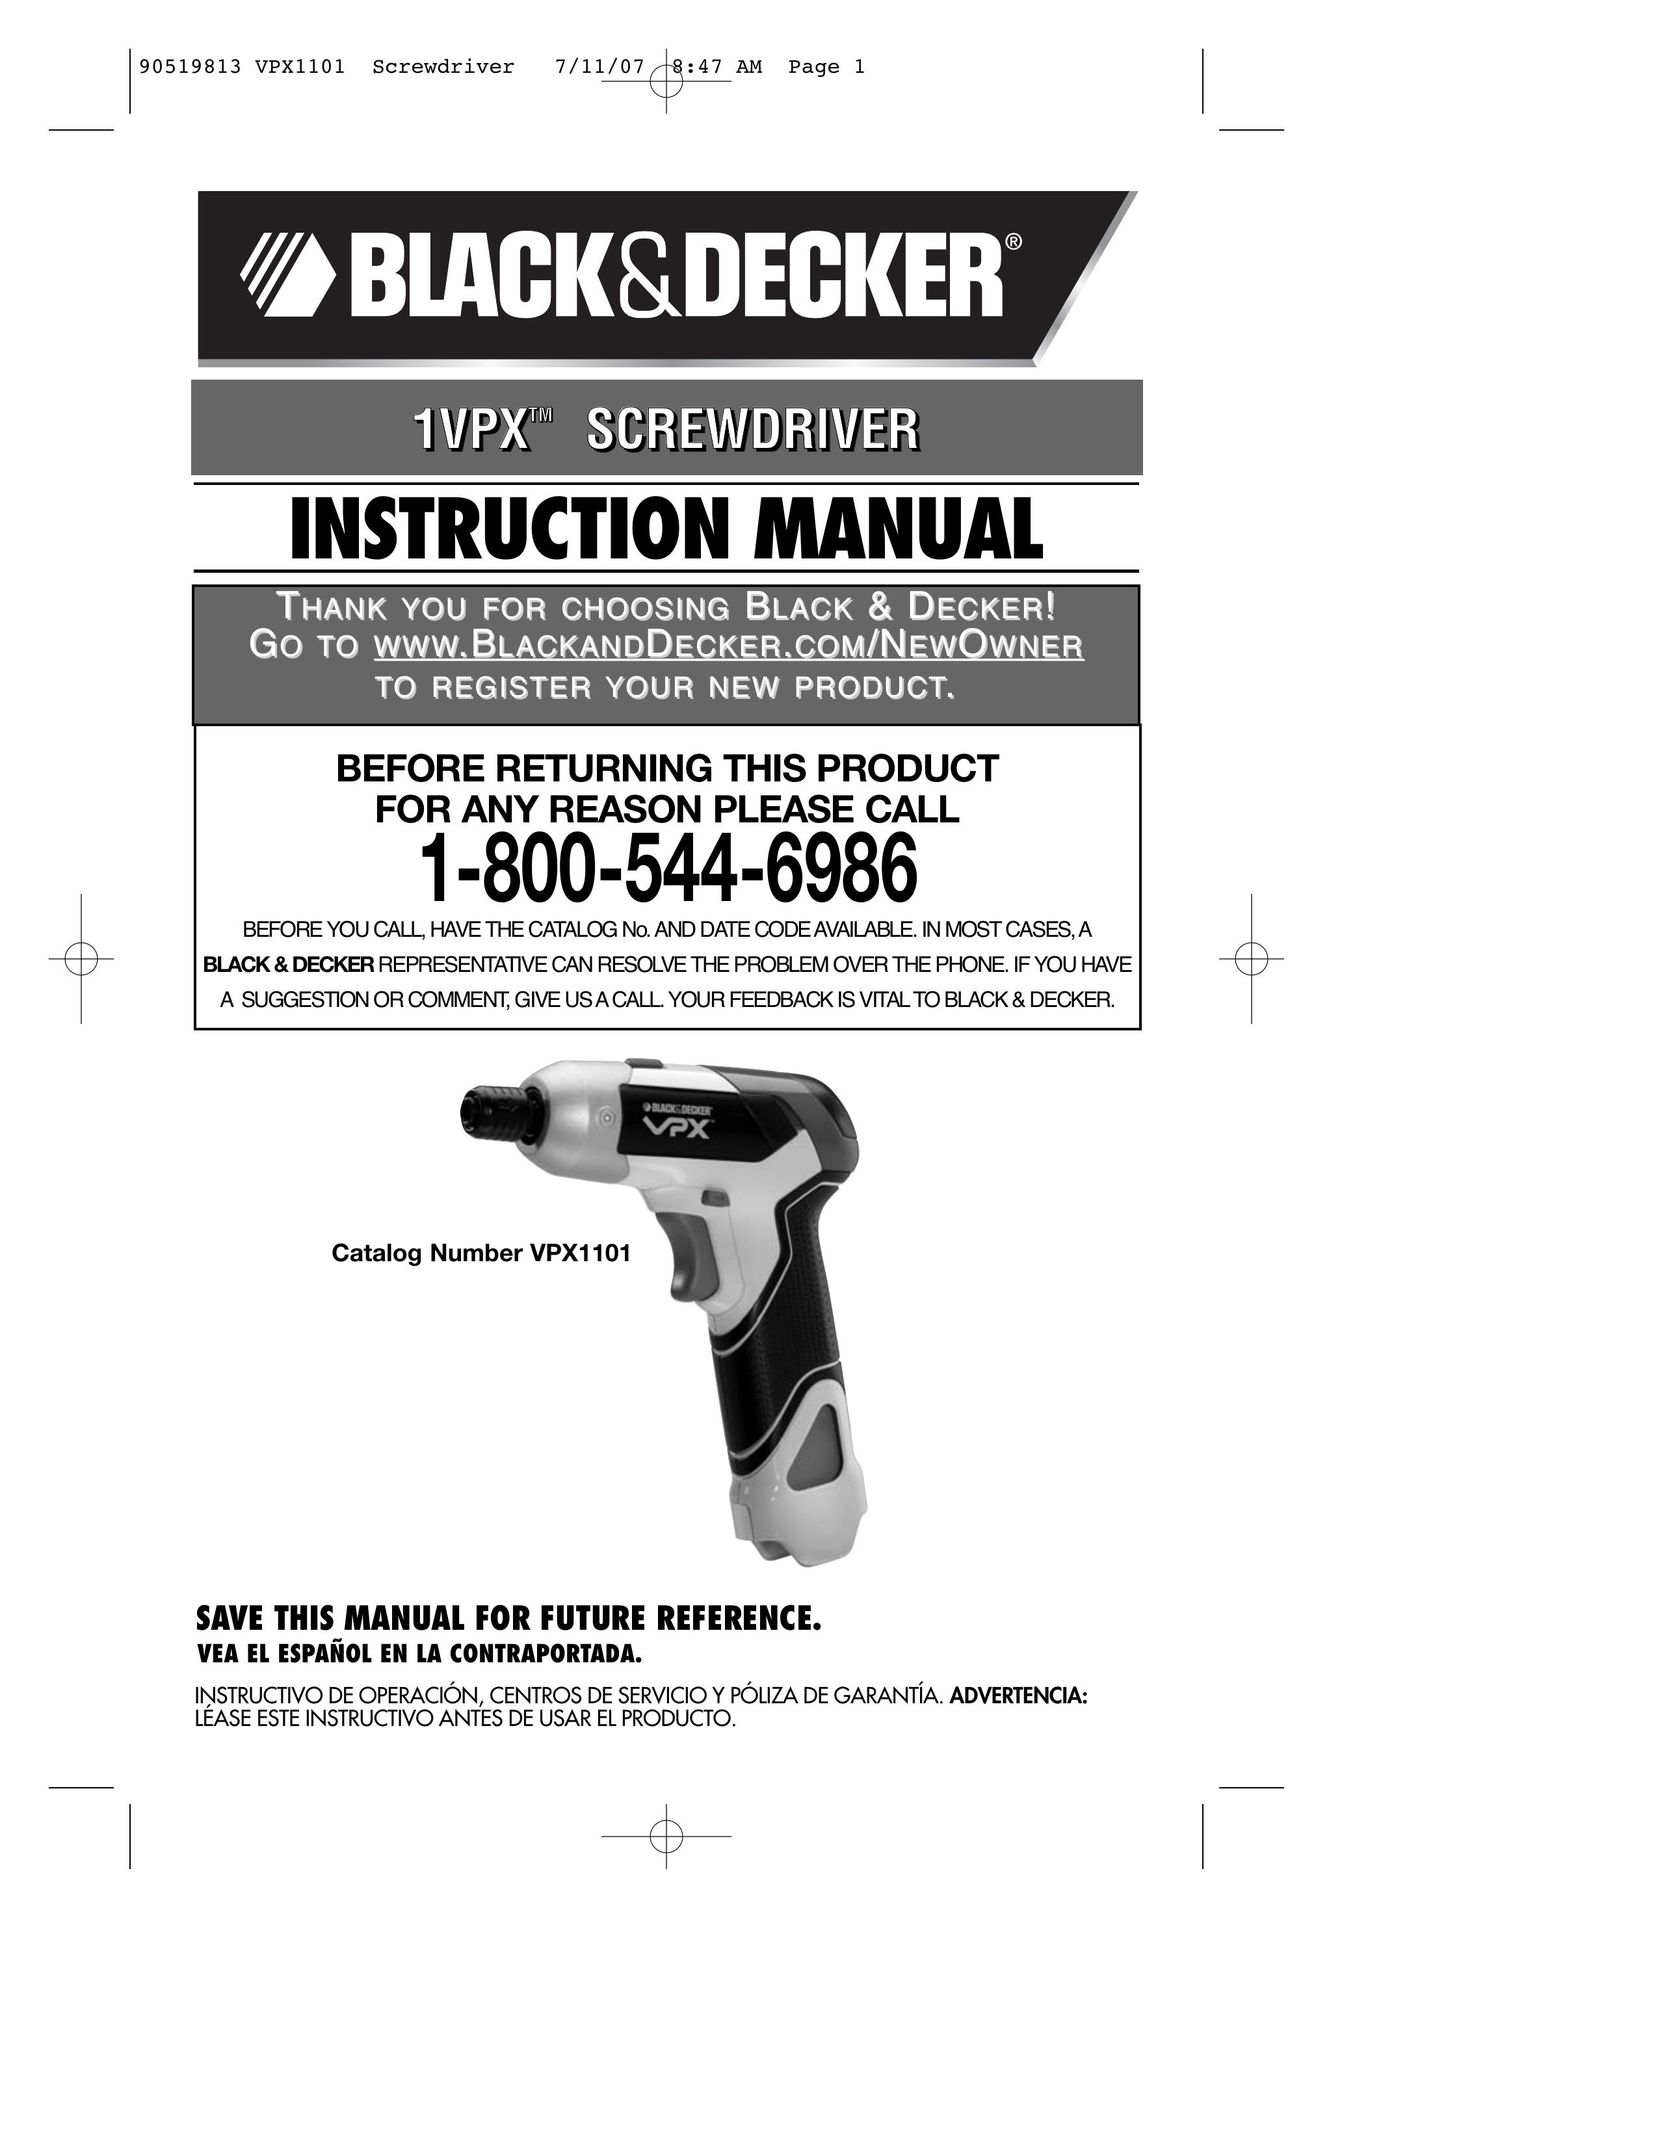 Black & Decker 1VPX Power Screwdriver User Manual